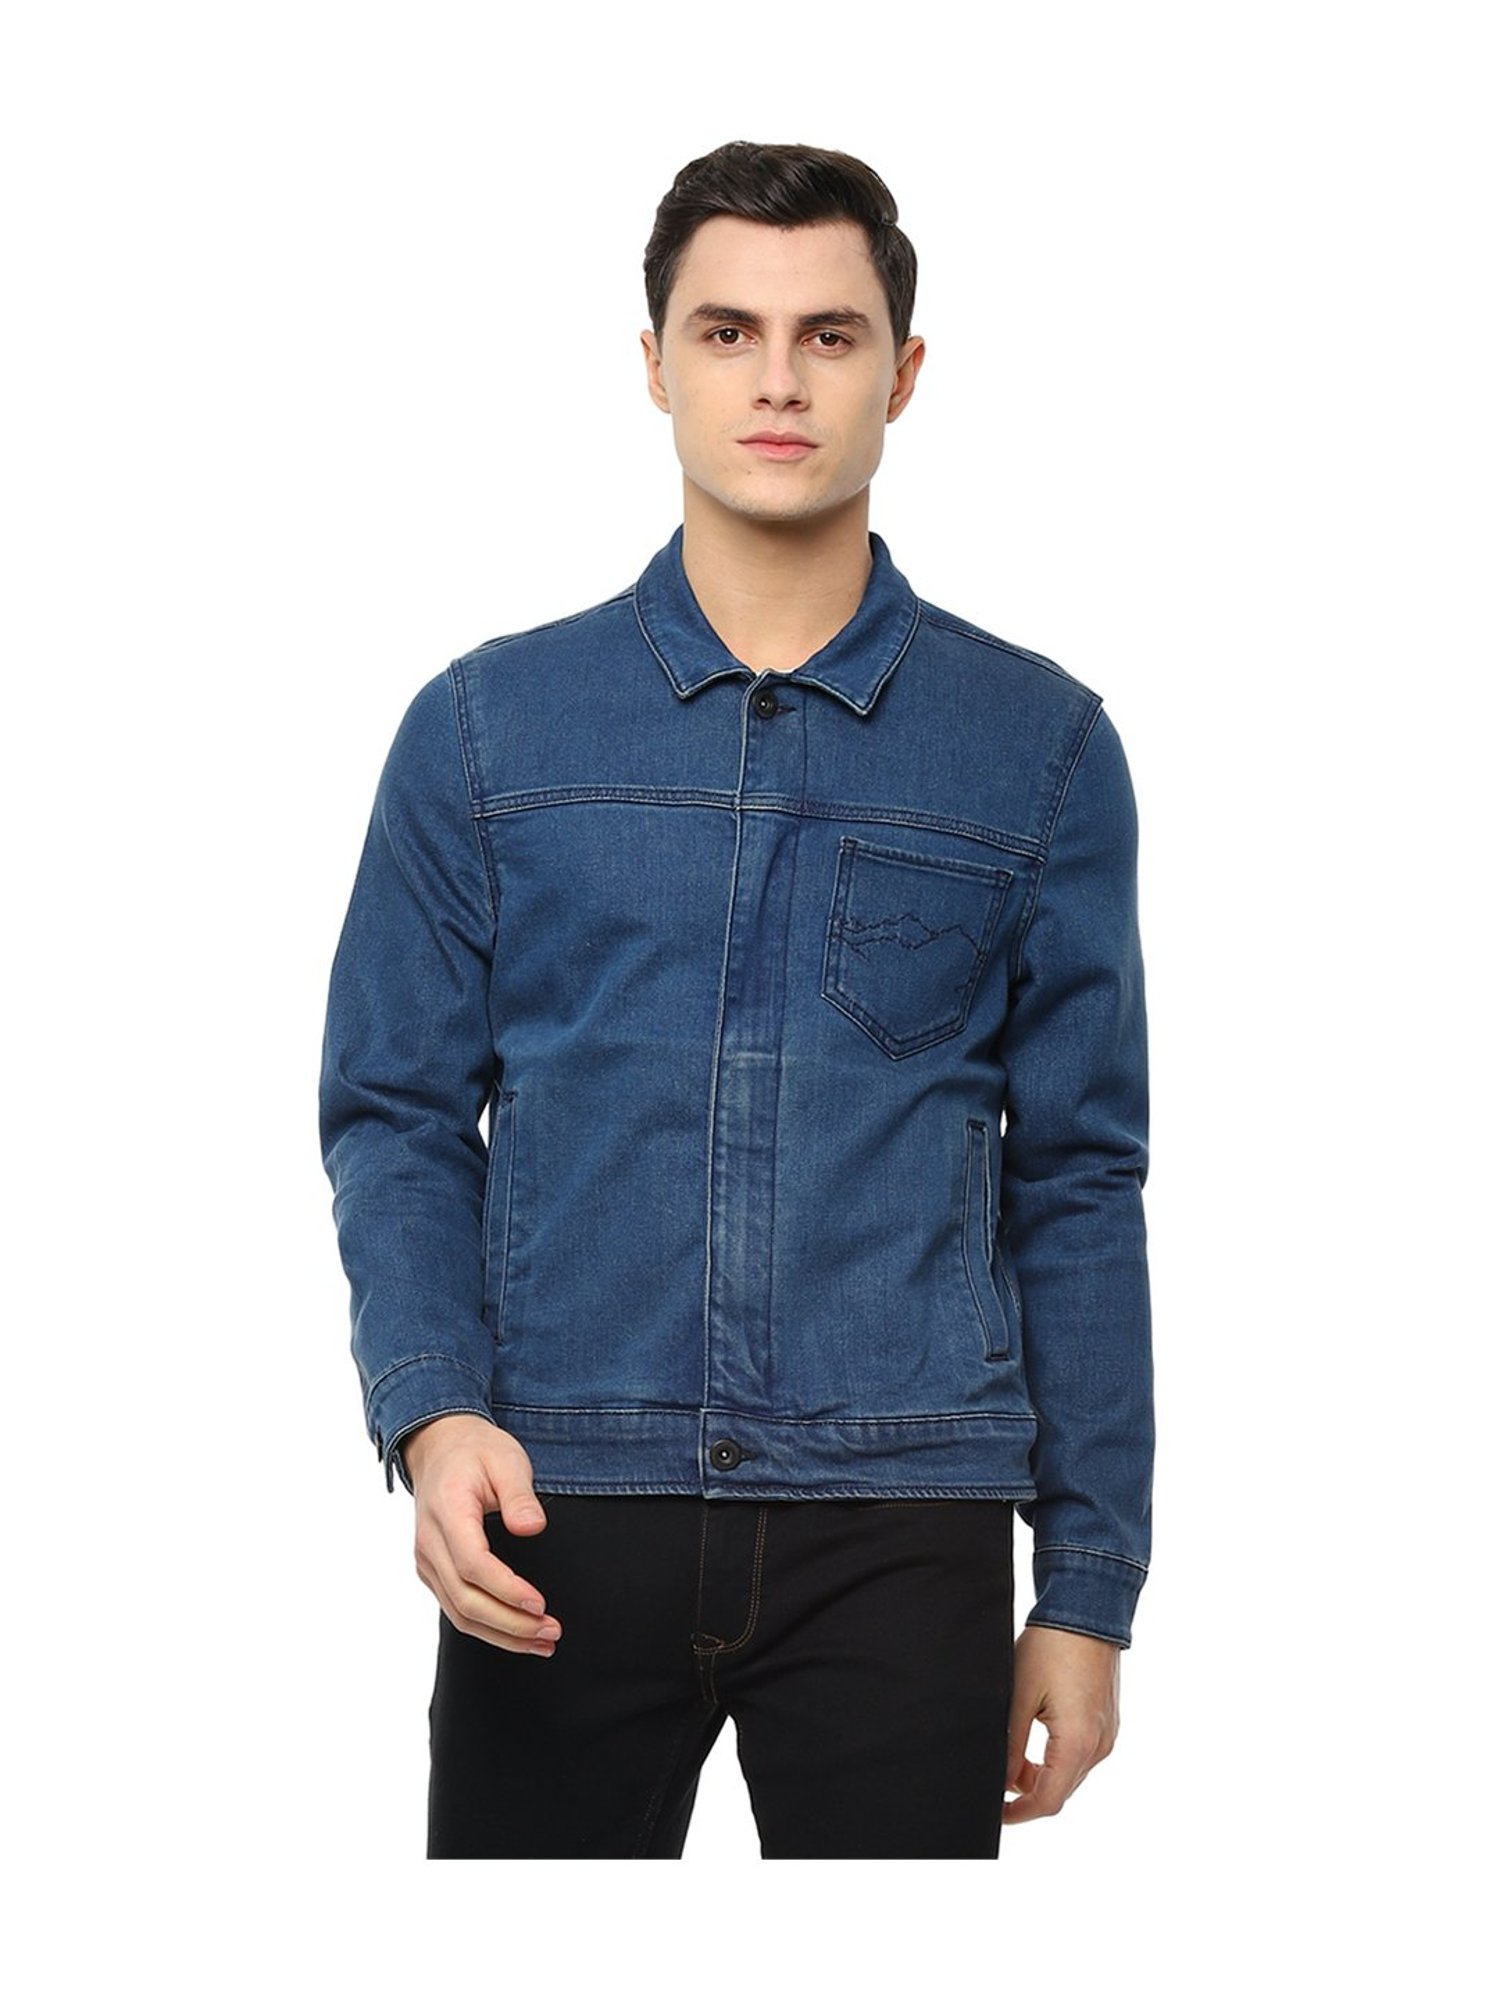 LP Jeans Jackets, Louis Philippe Blue Jacket for Men at Louisphilippe.com